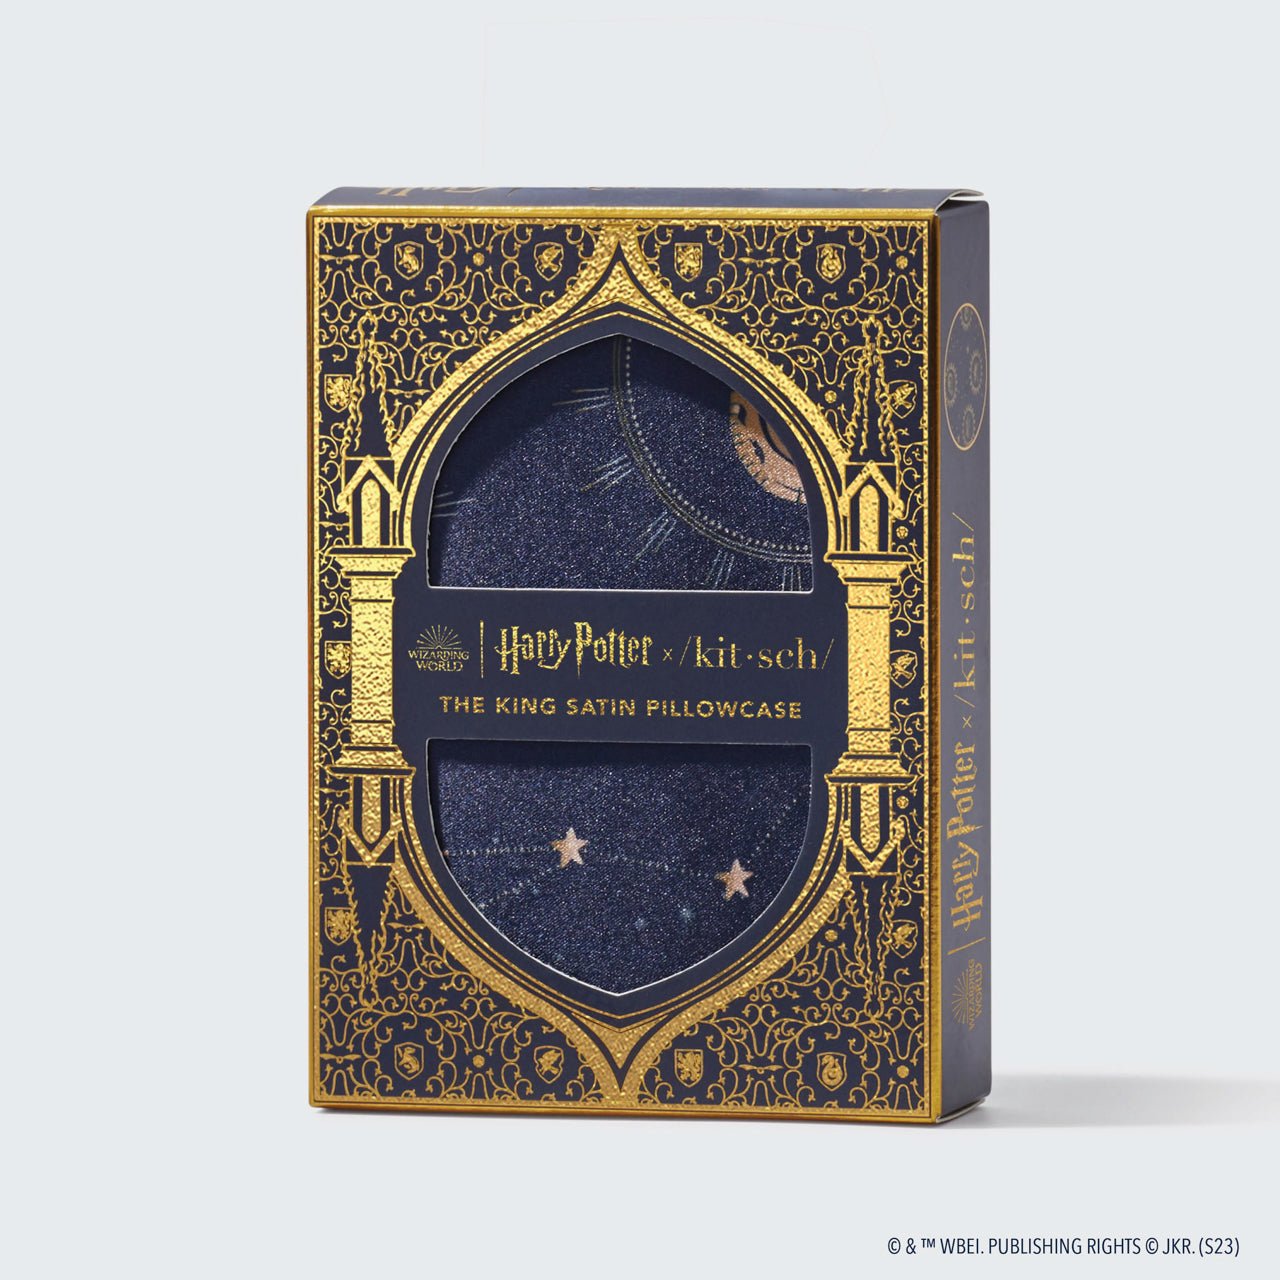 Harry Potter x Kitsch King Satin 베갯잇 - Midnight at Hogwarts